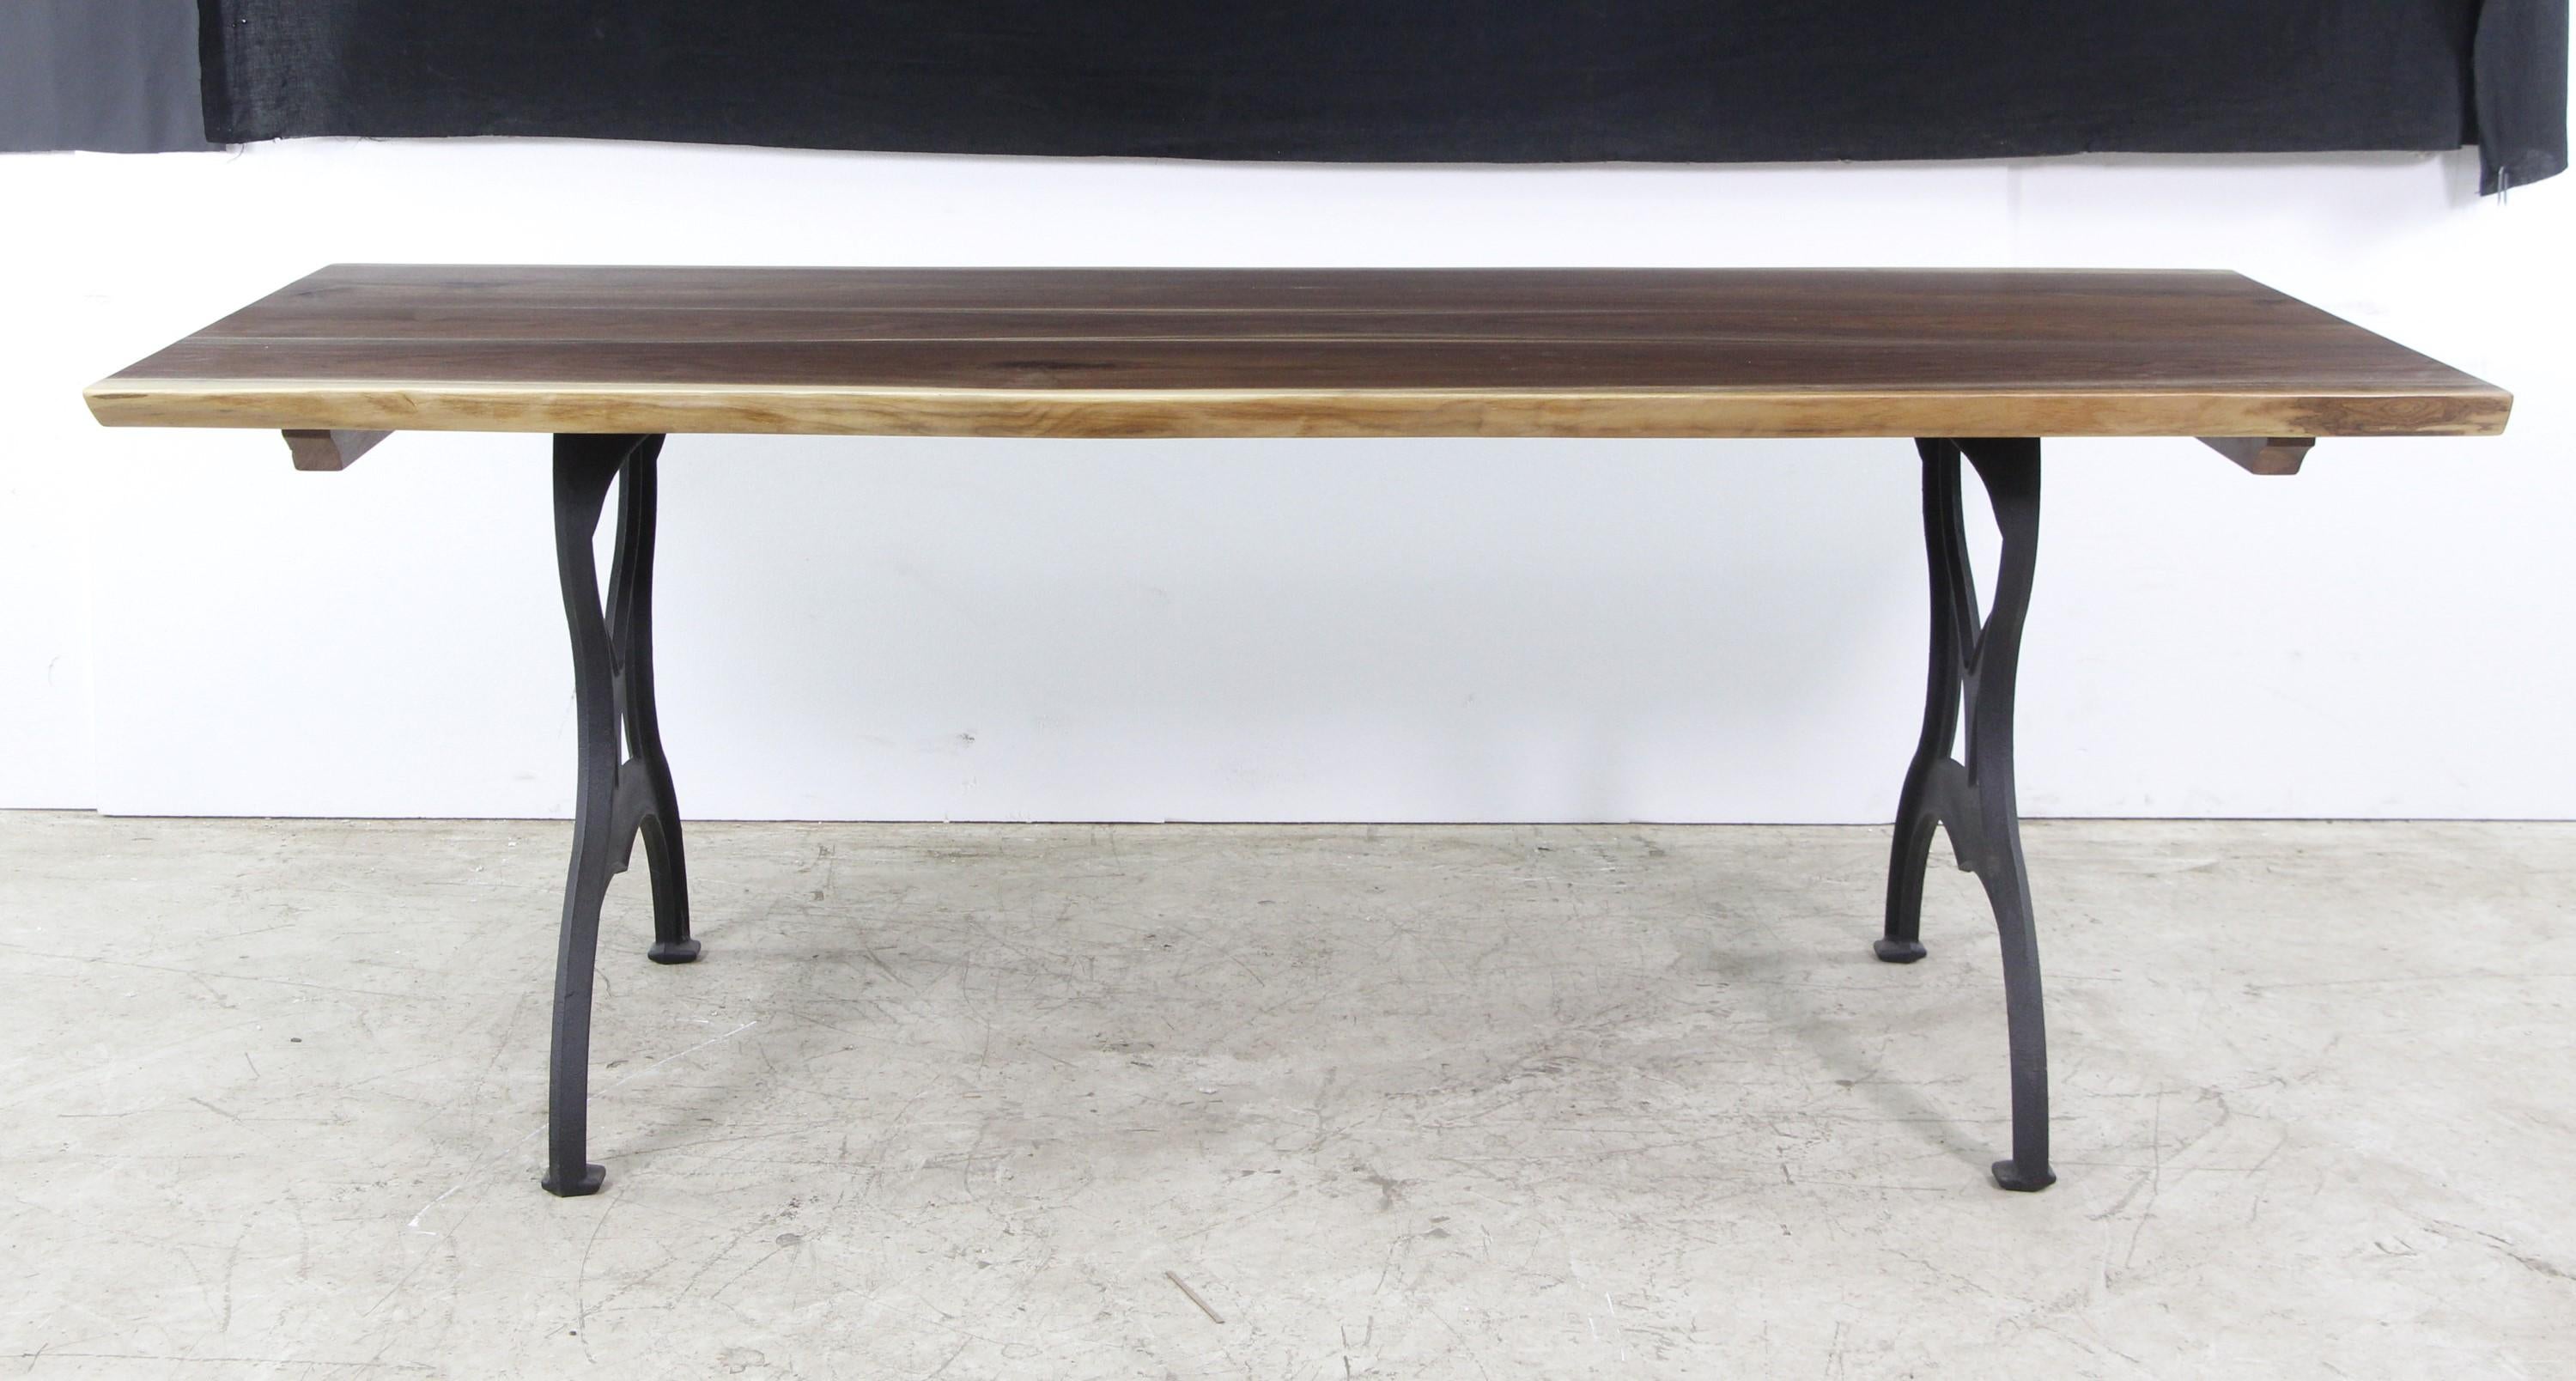 3 Plank Live Edge Solid Walnut Table Industrial Legs Cast Iron Brooklyn NY 6